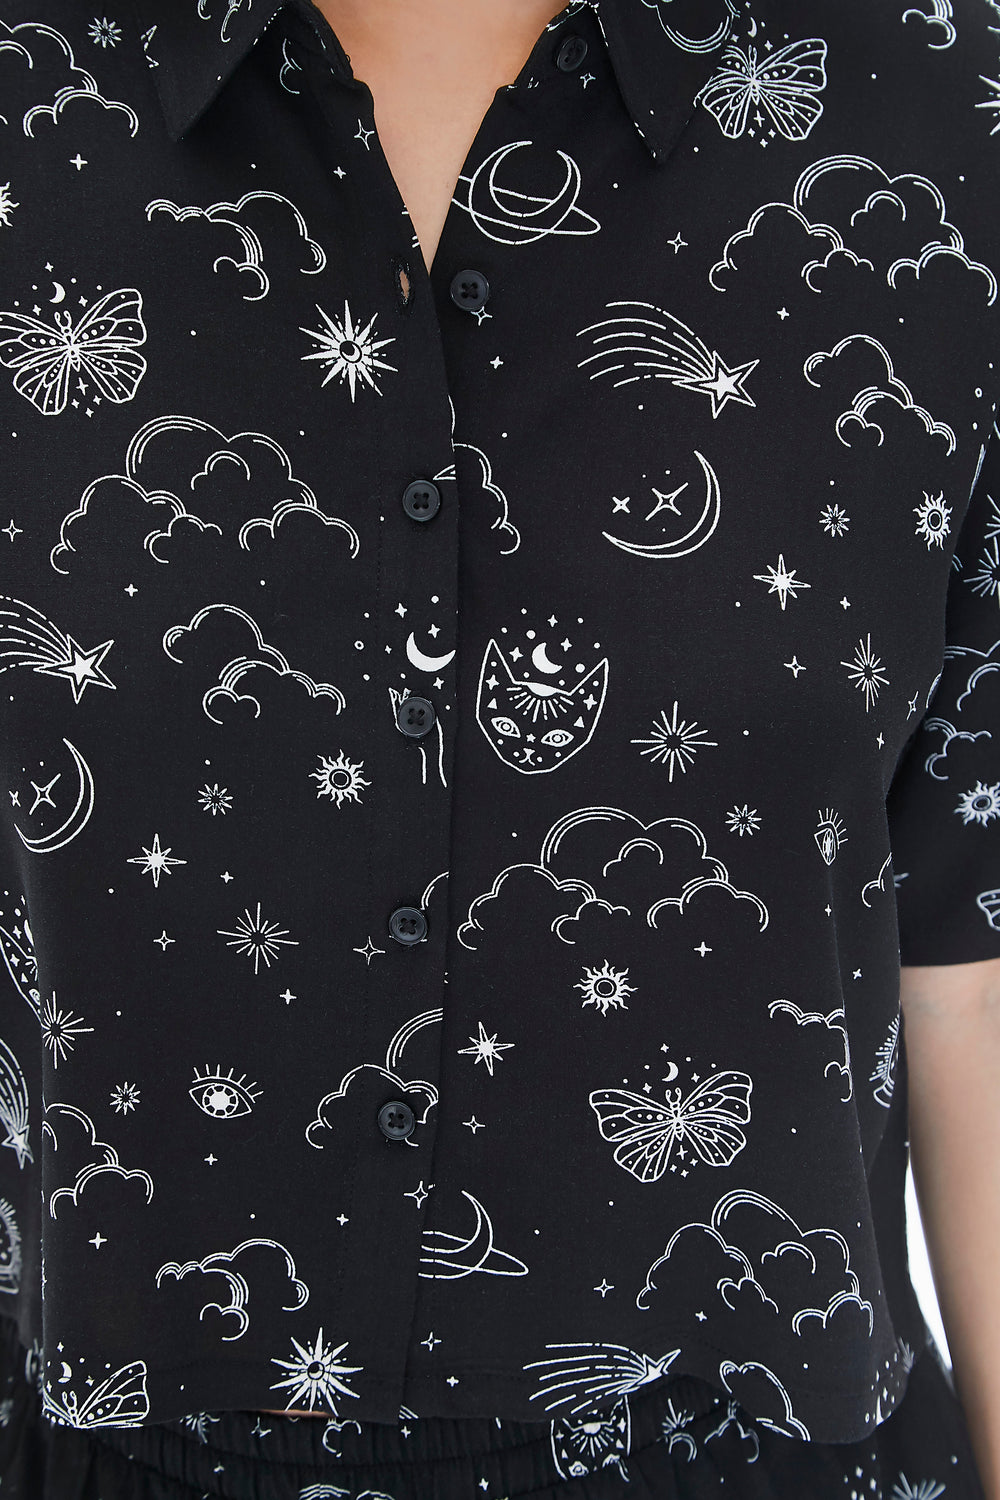 Celestial Print Cropped Shirt Black